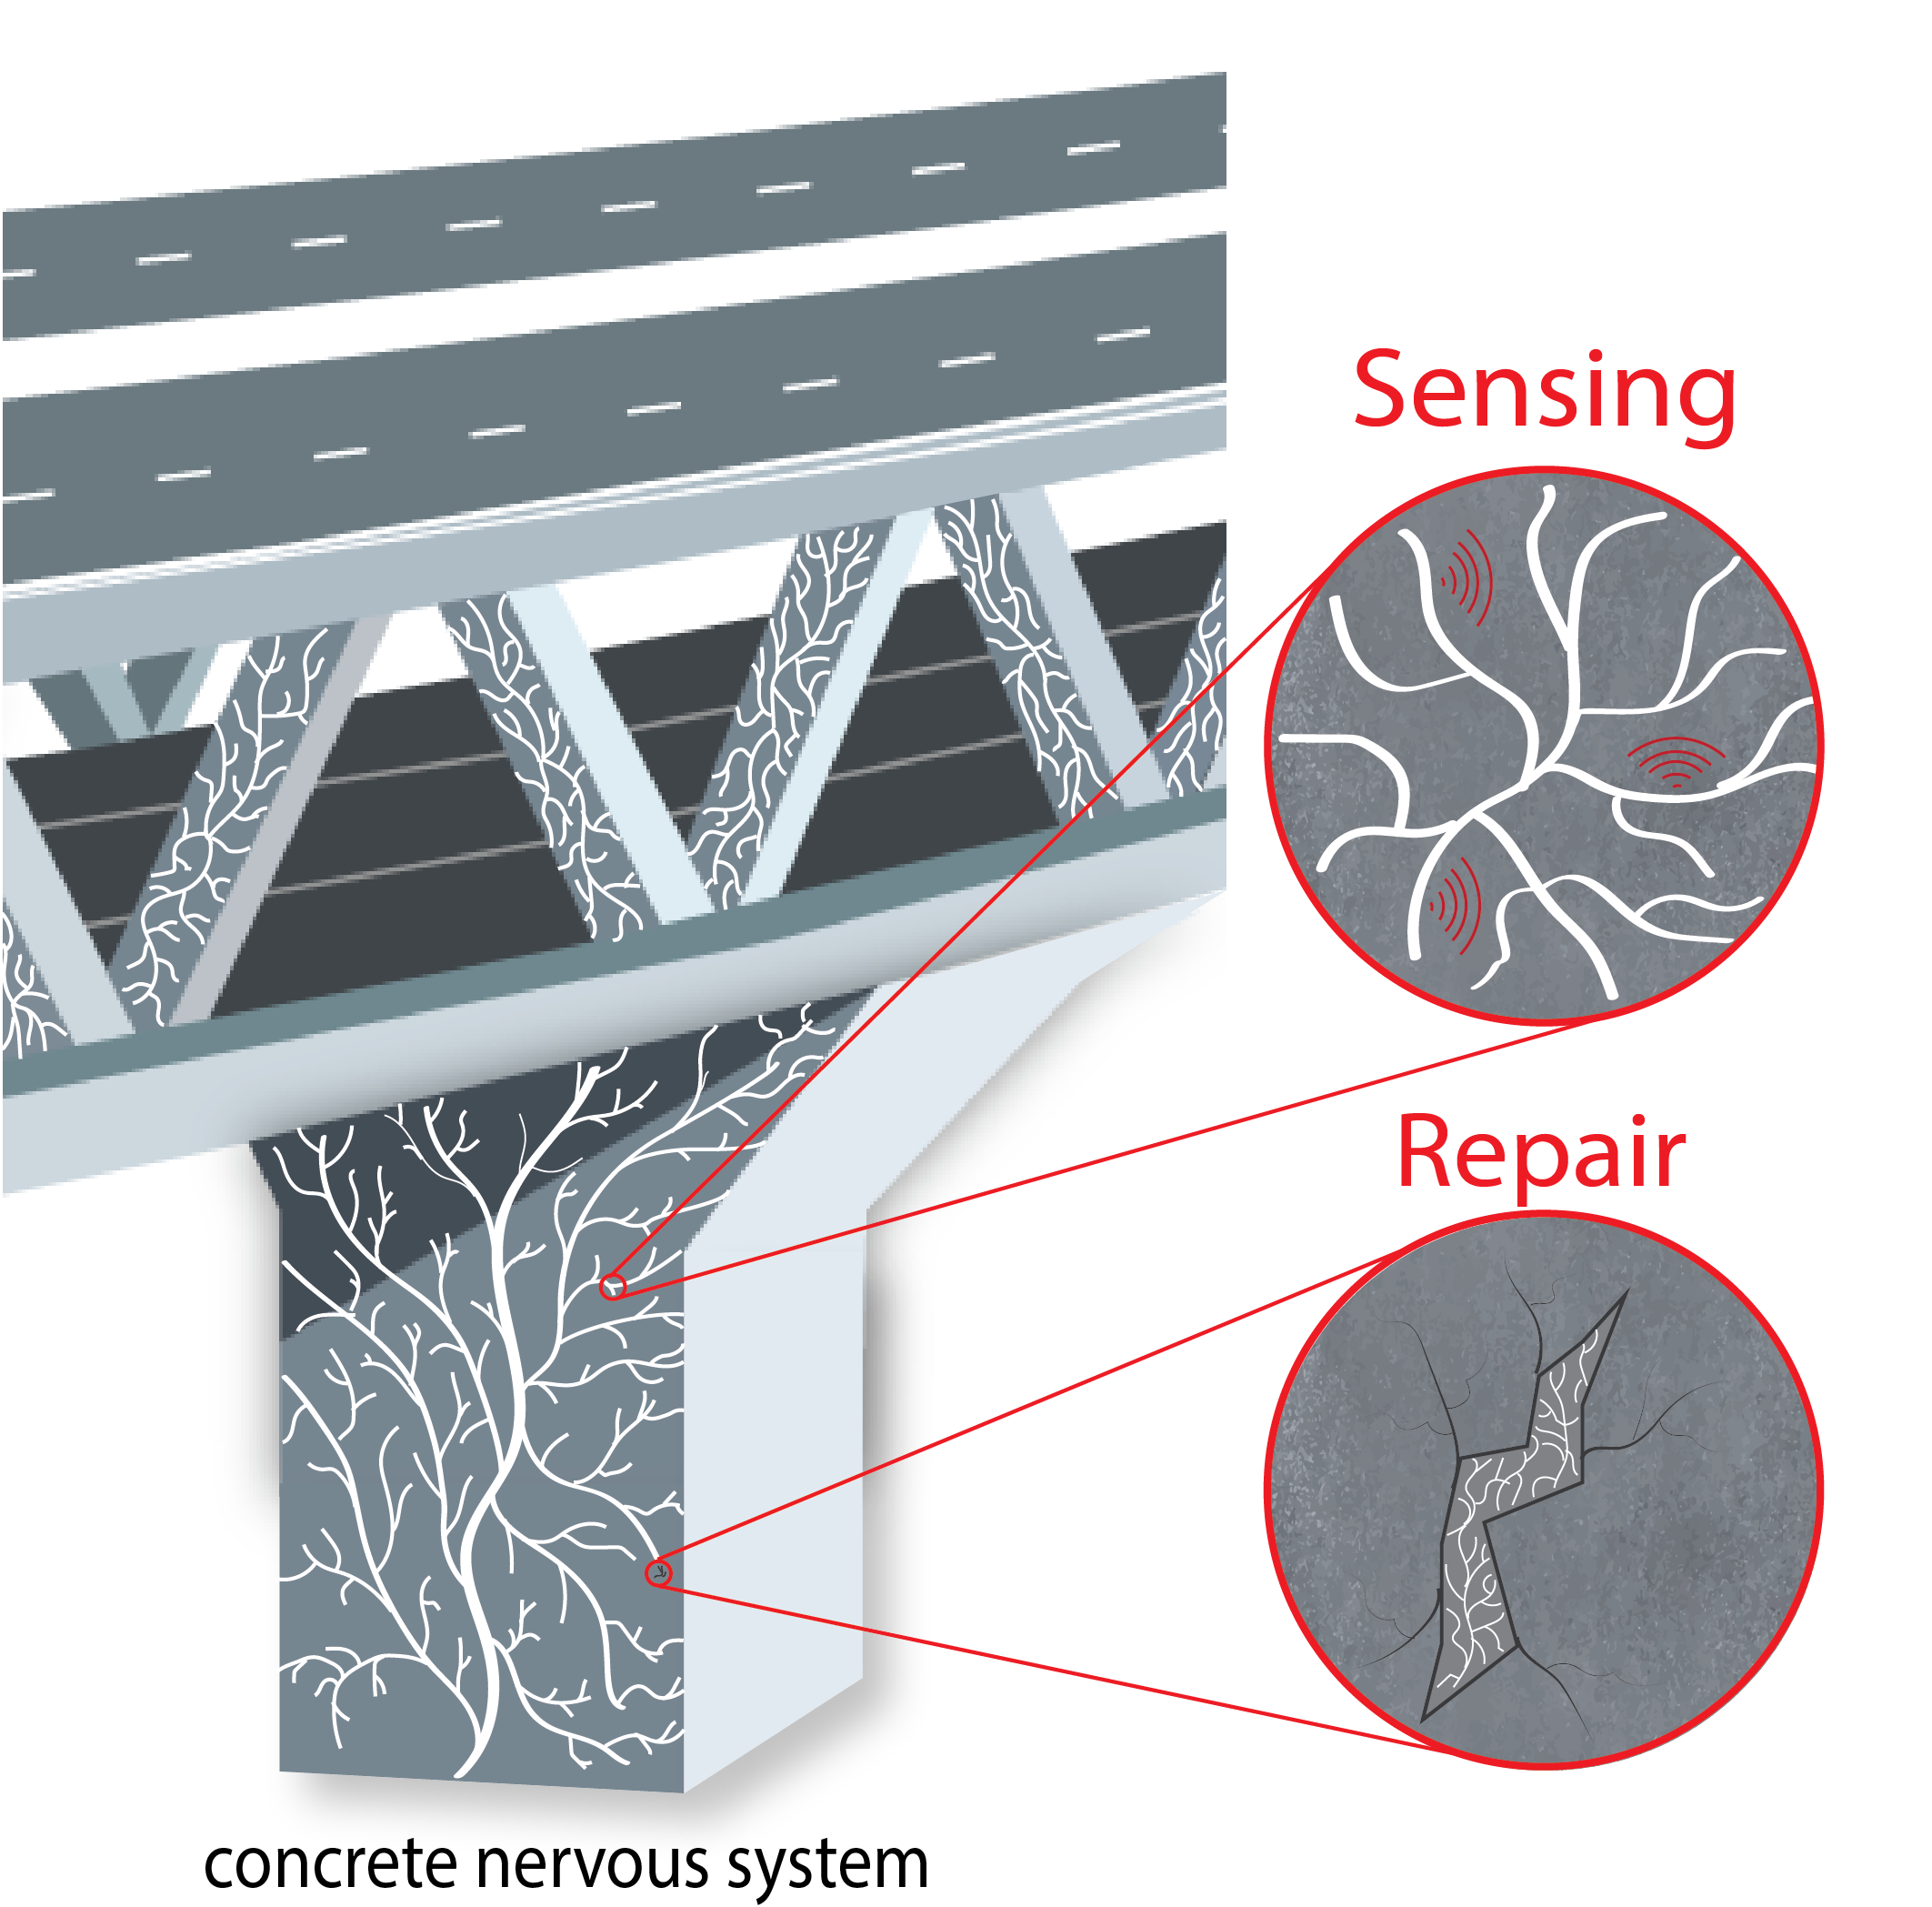 Integrating sensing capabilities in concrete structures